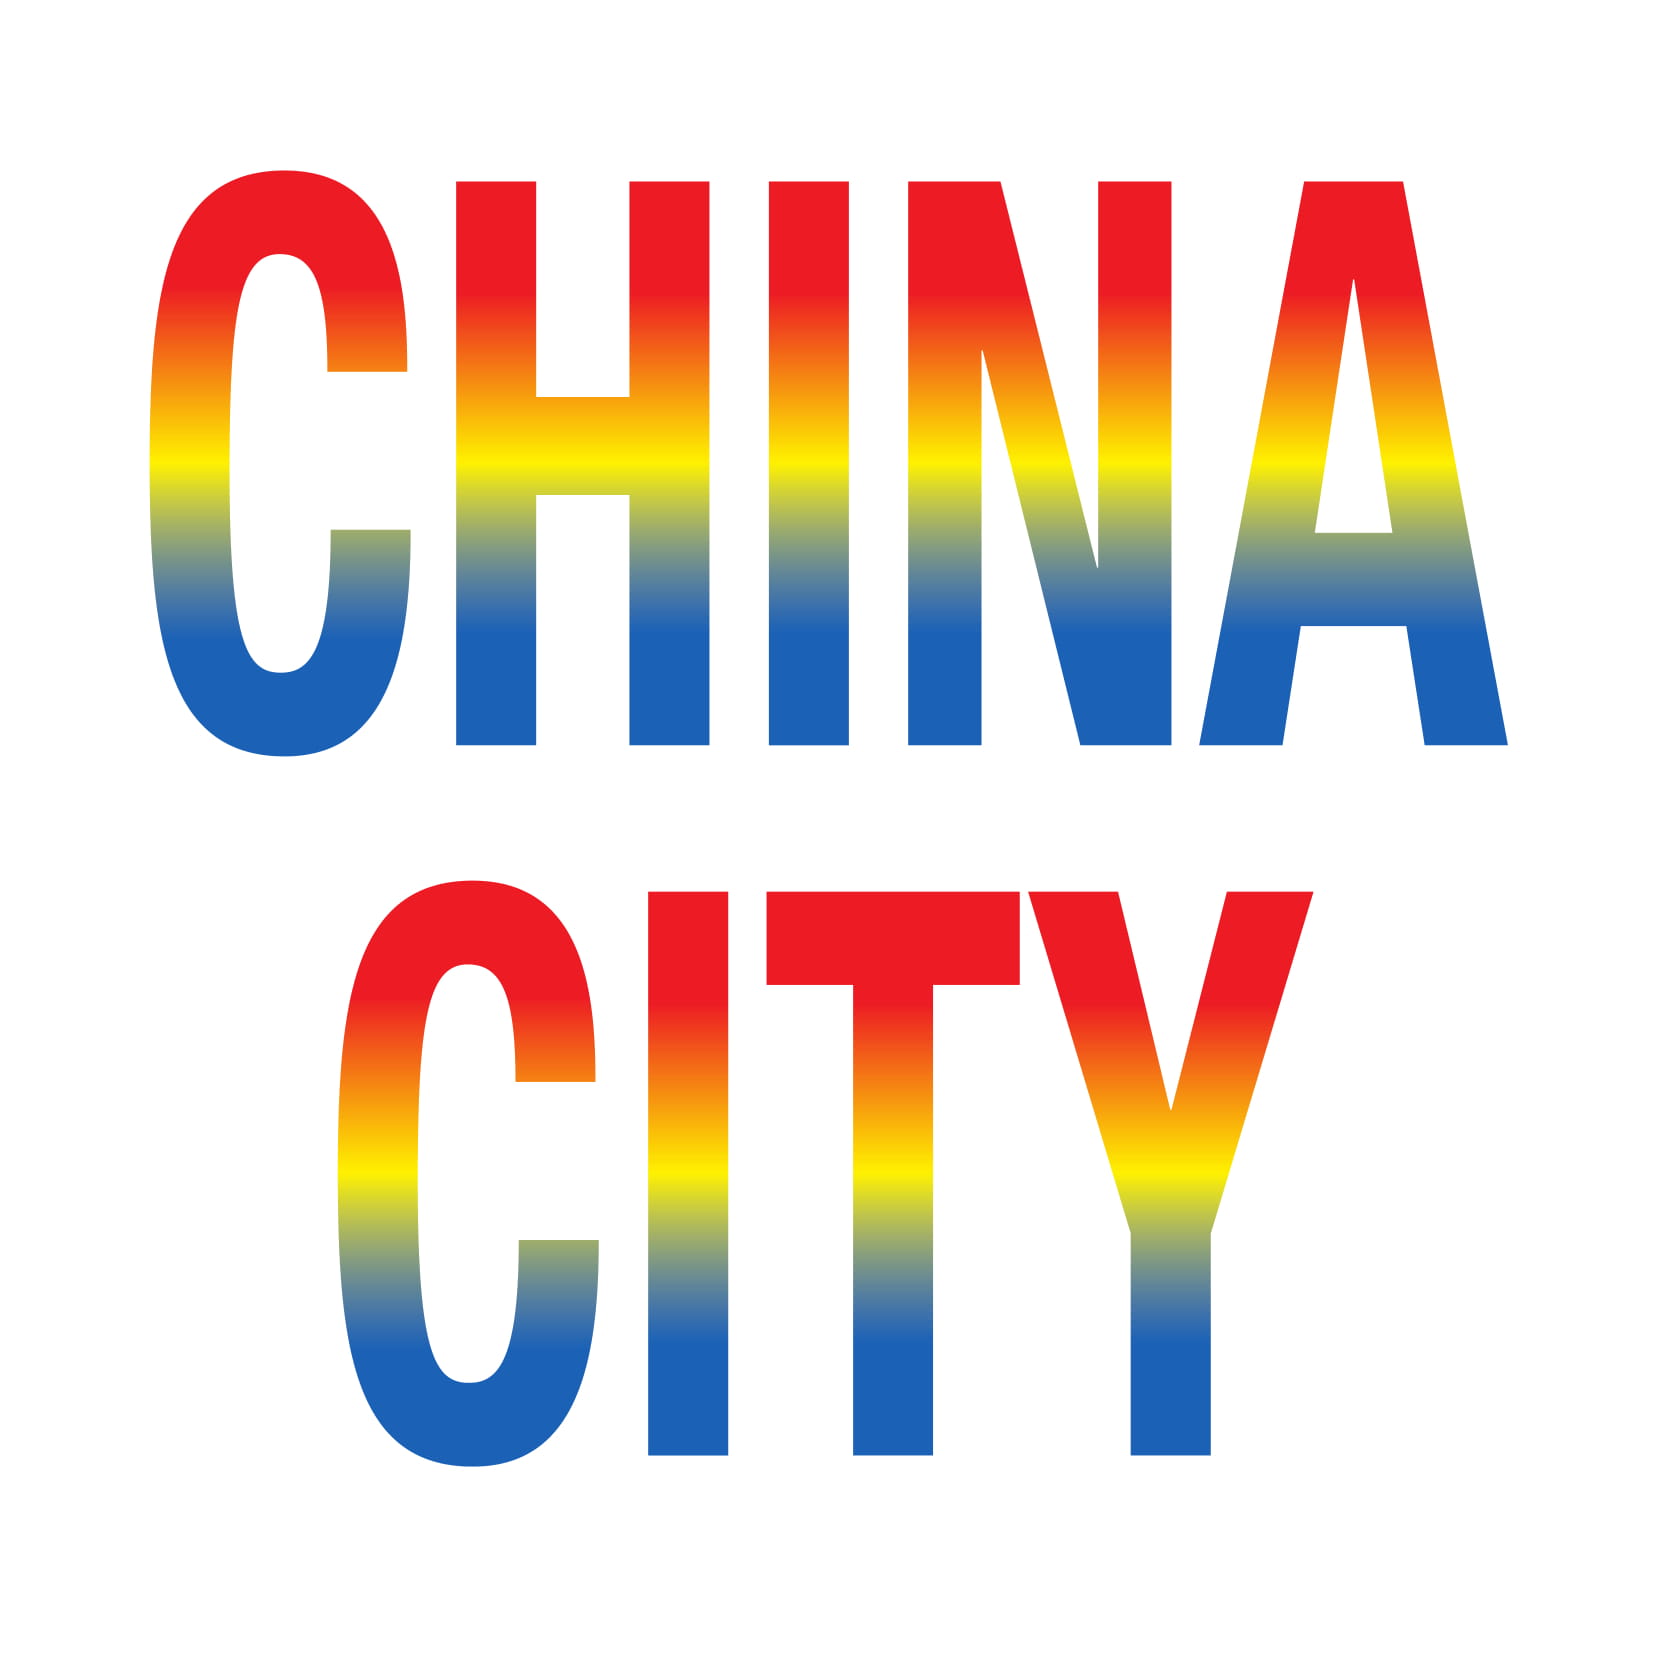 CHINA CITY